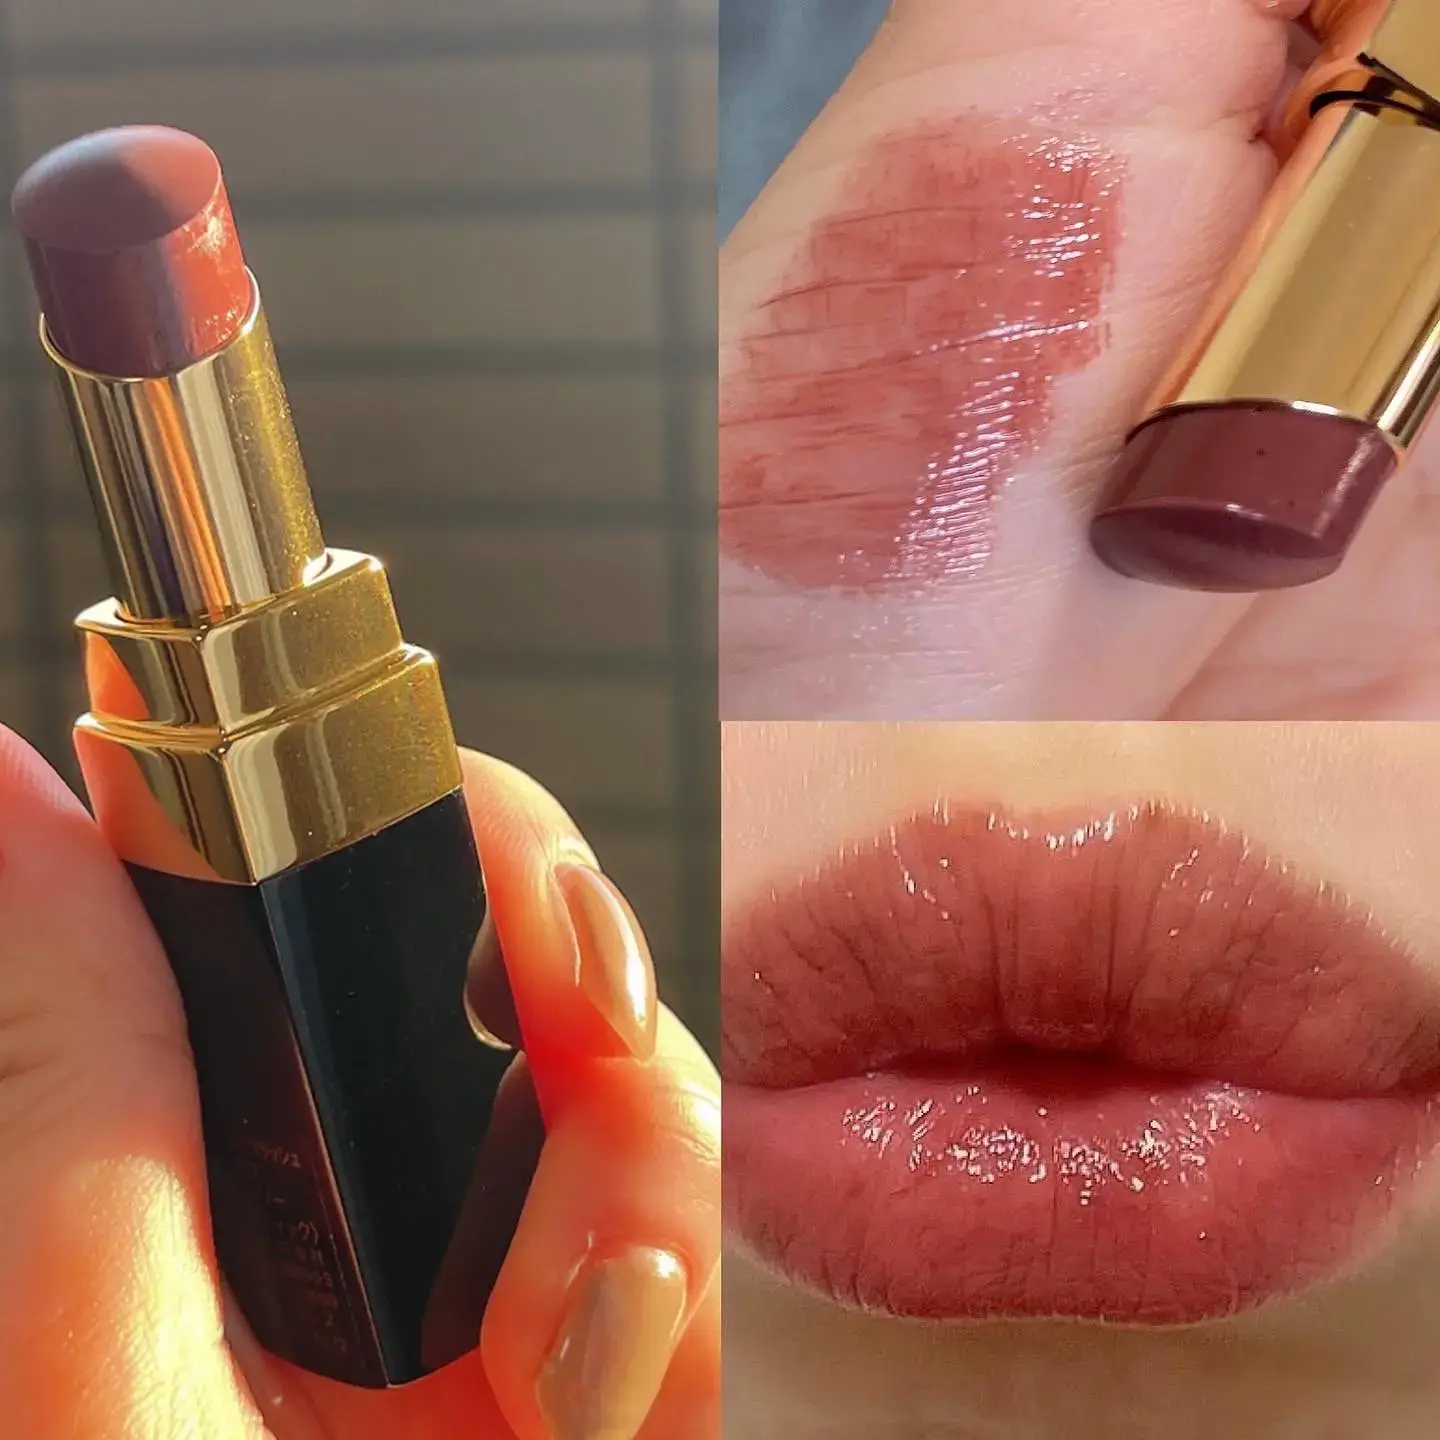 chanel halo lipstick